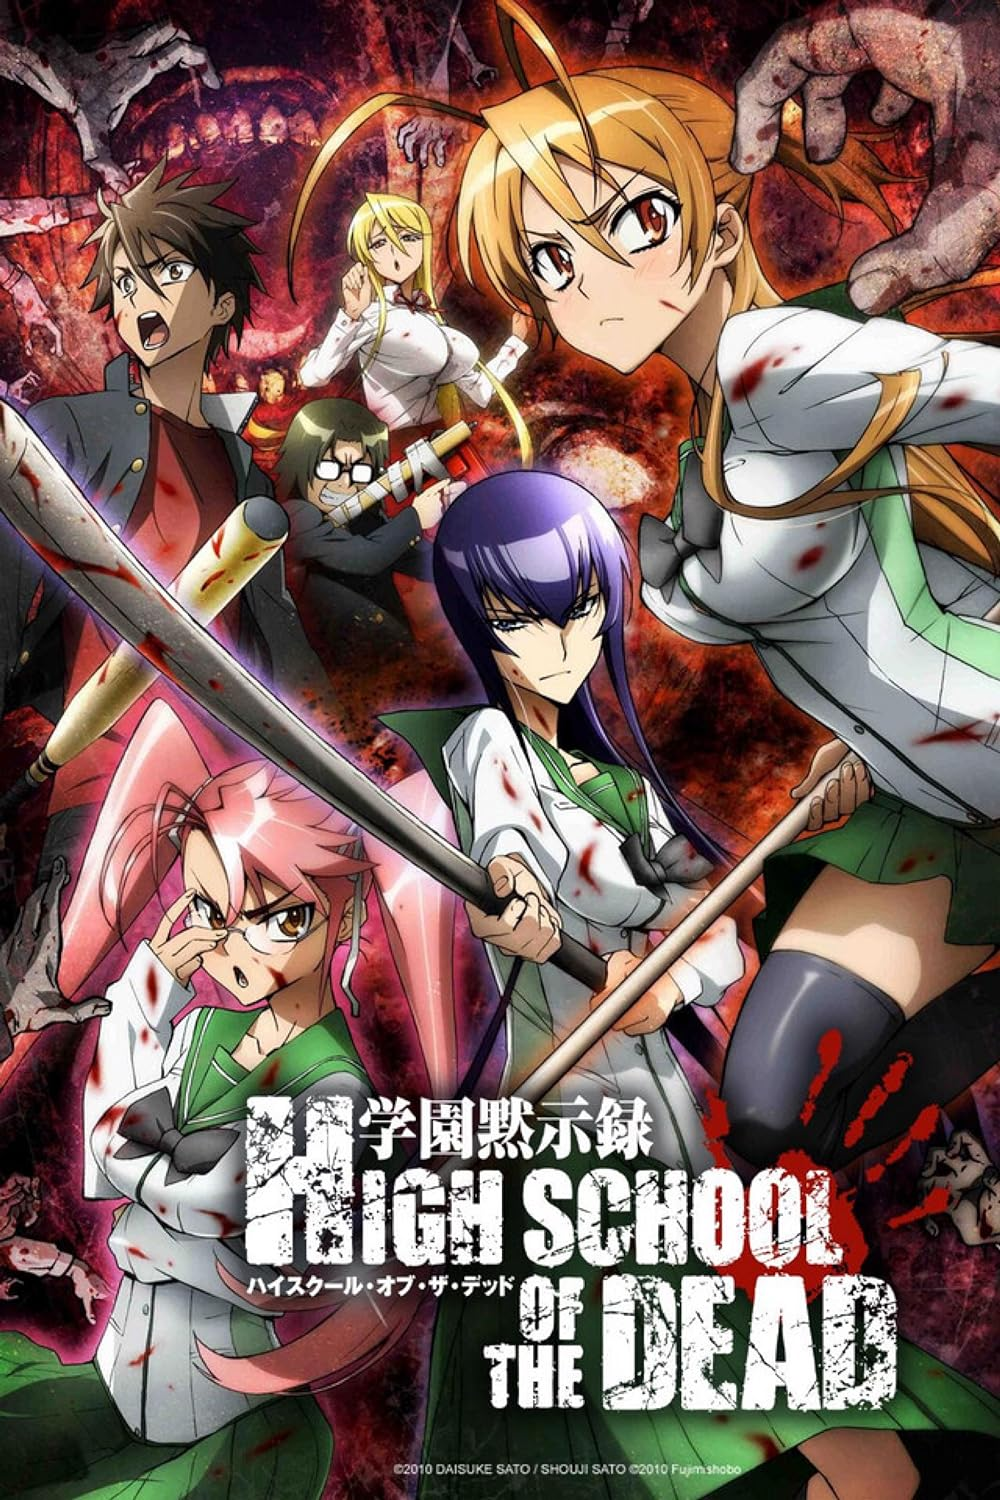 High School of The Dead Visual anime like high school DxD